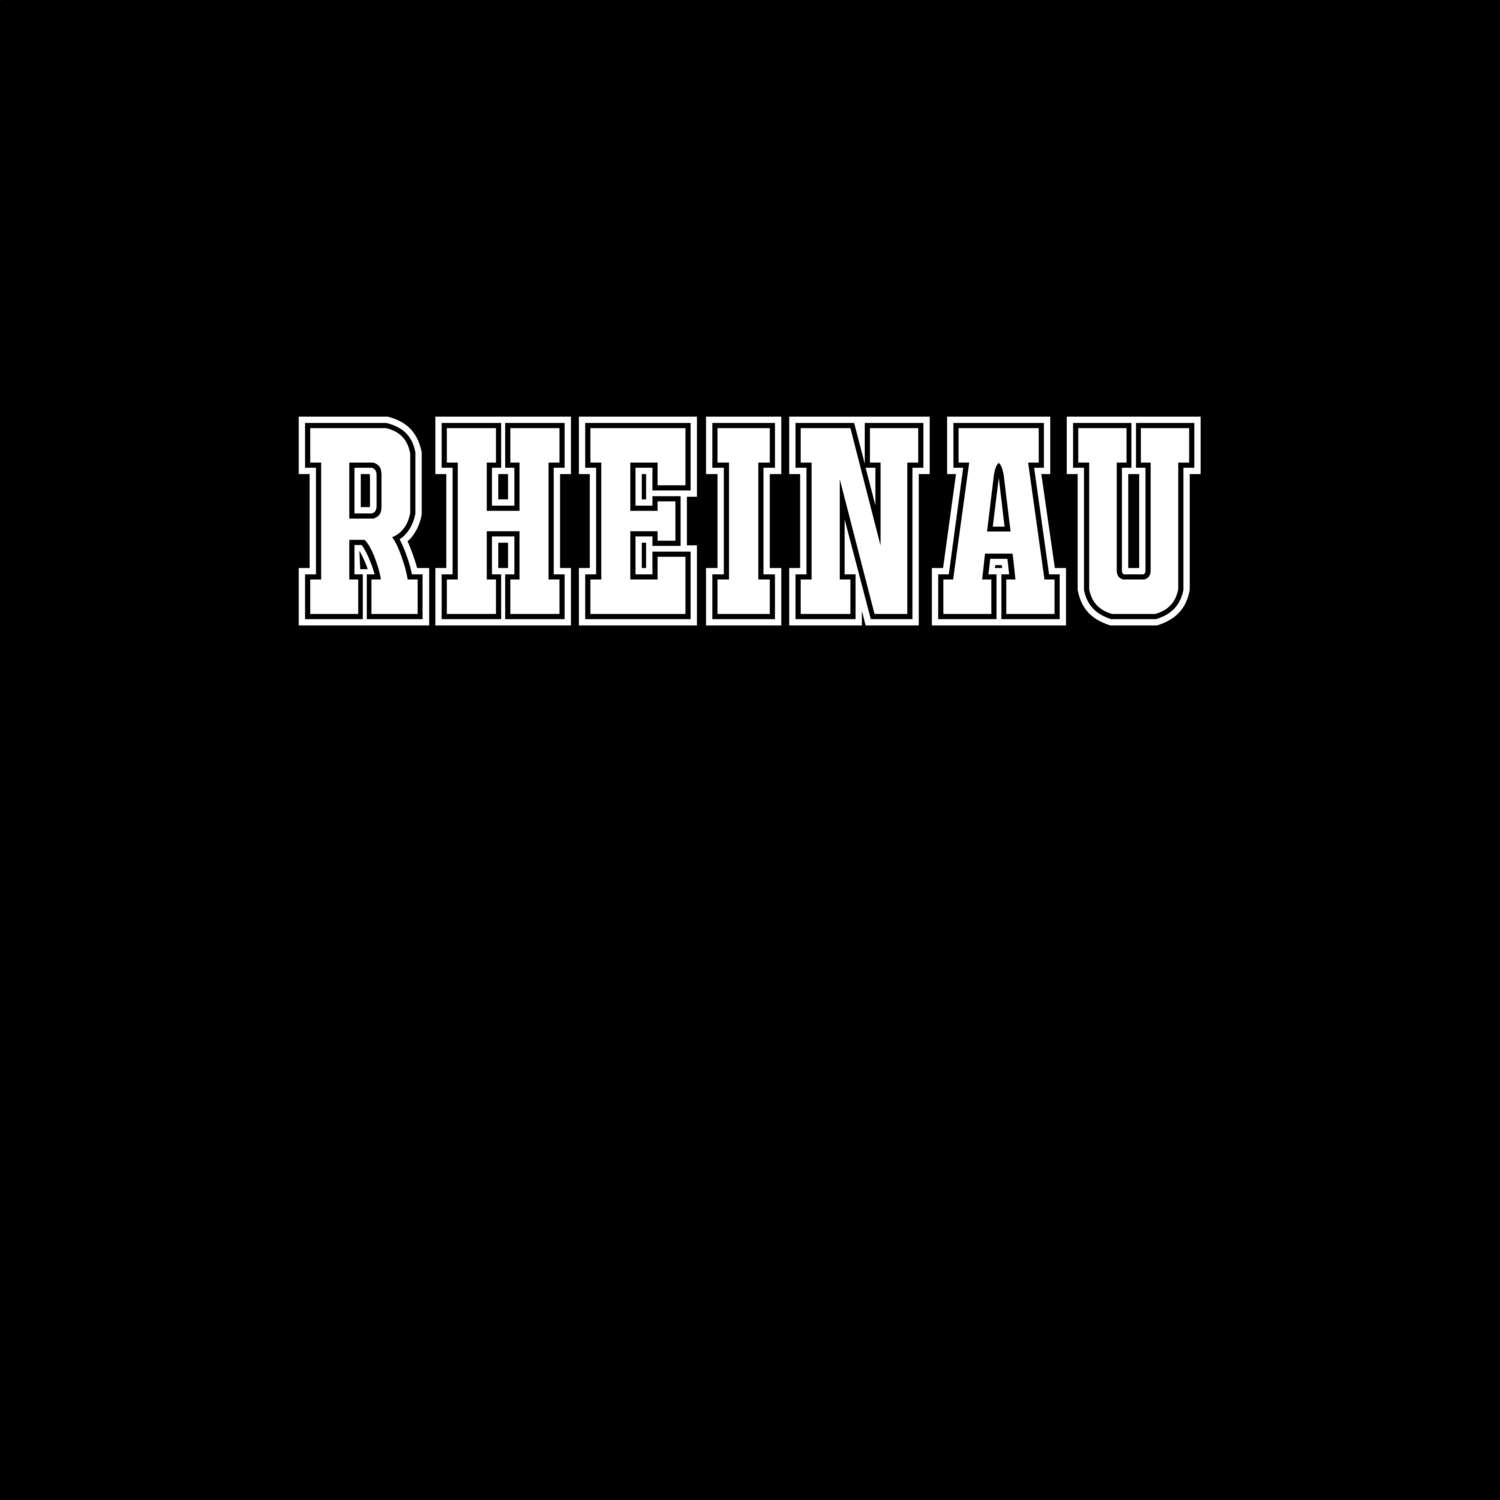 Rheinau T-Shirt »Classic«